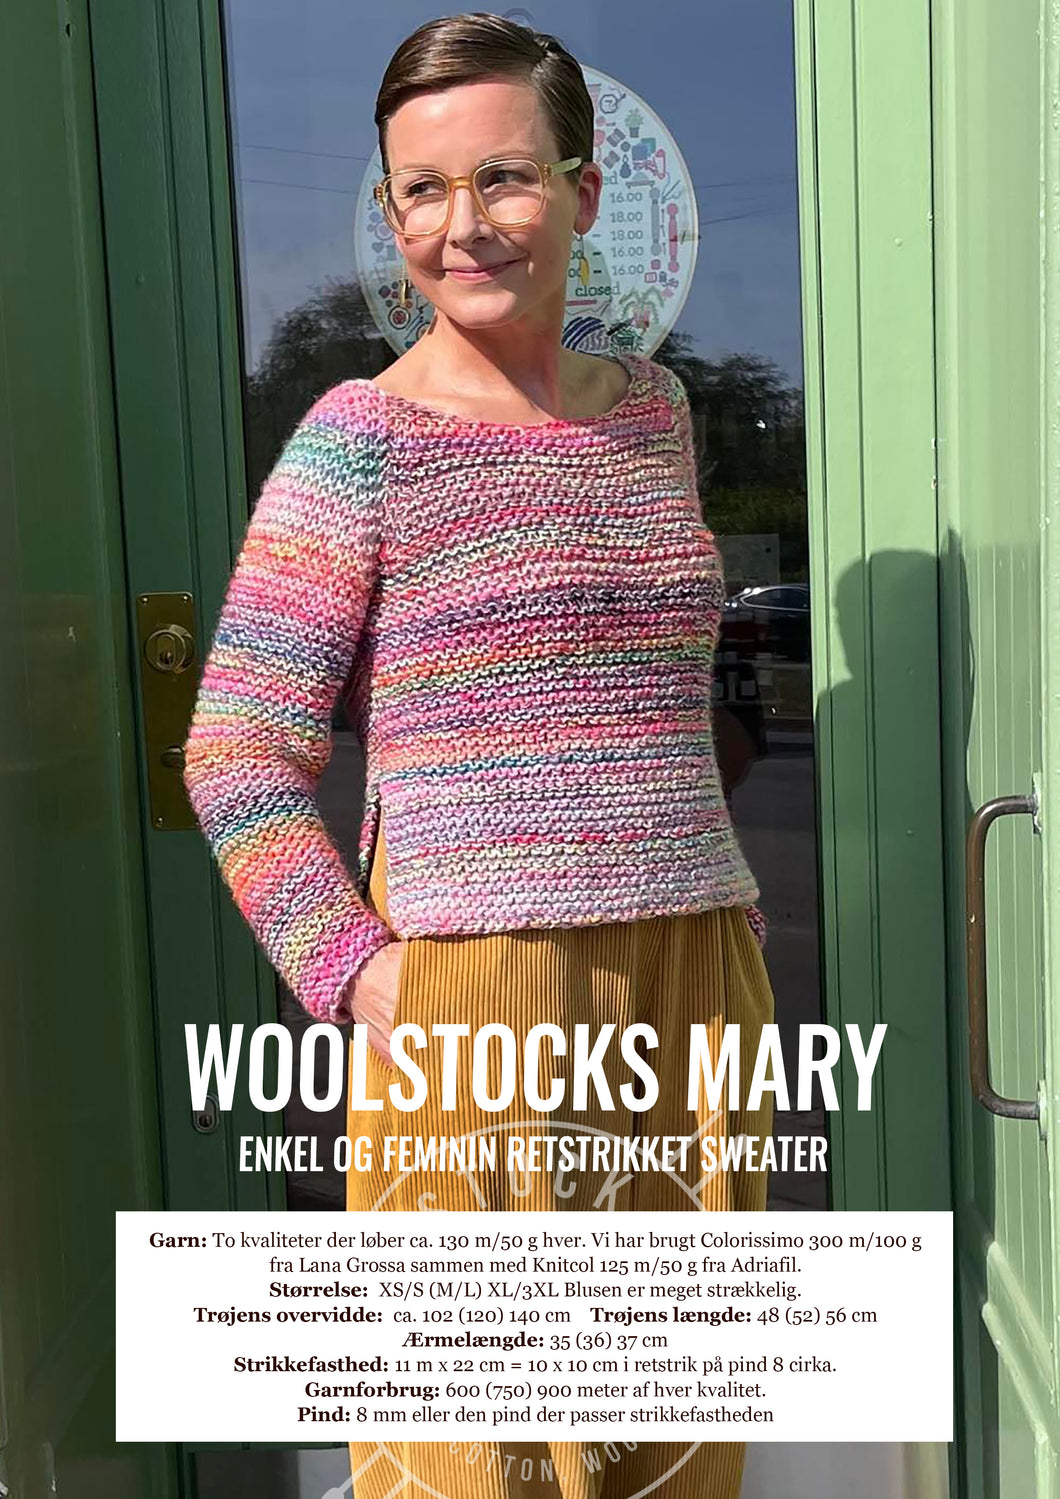 Woolstocks Mary